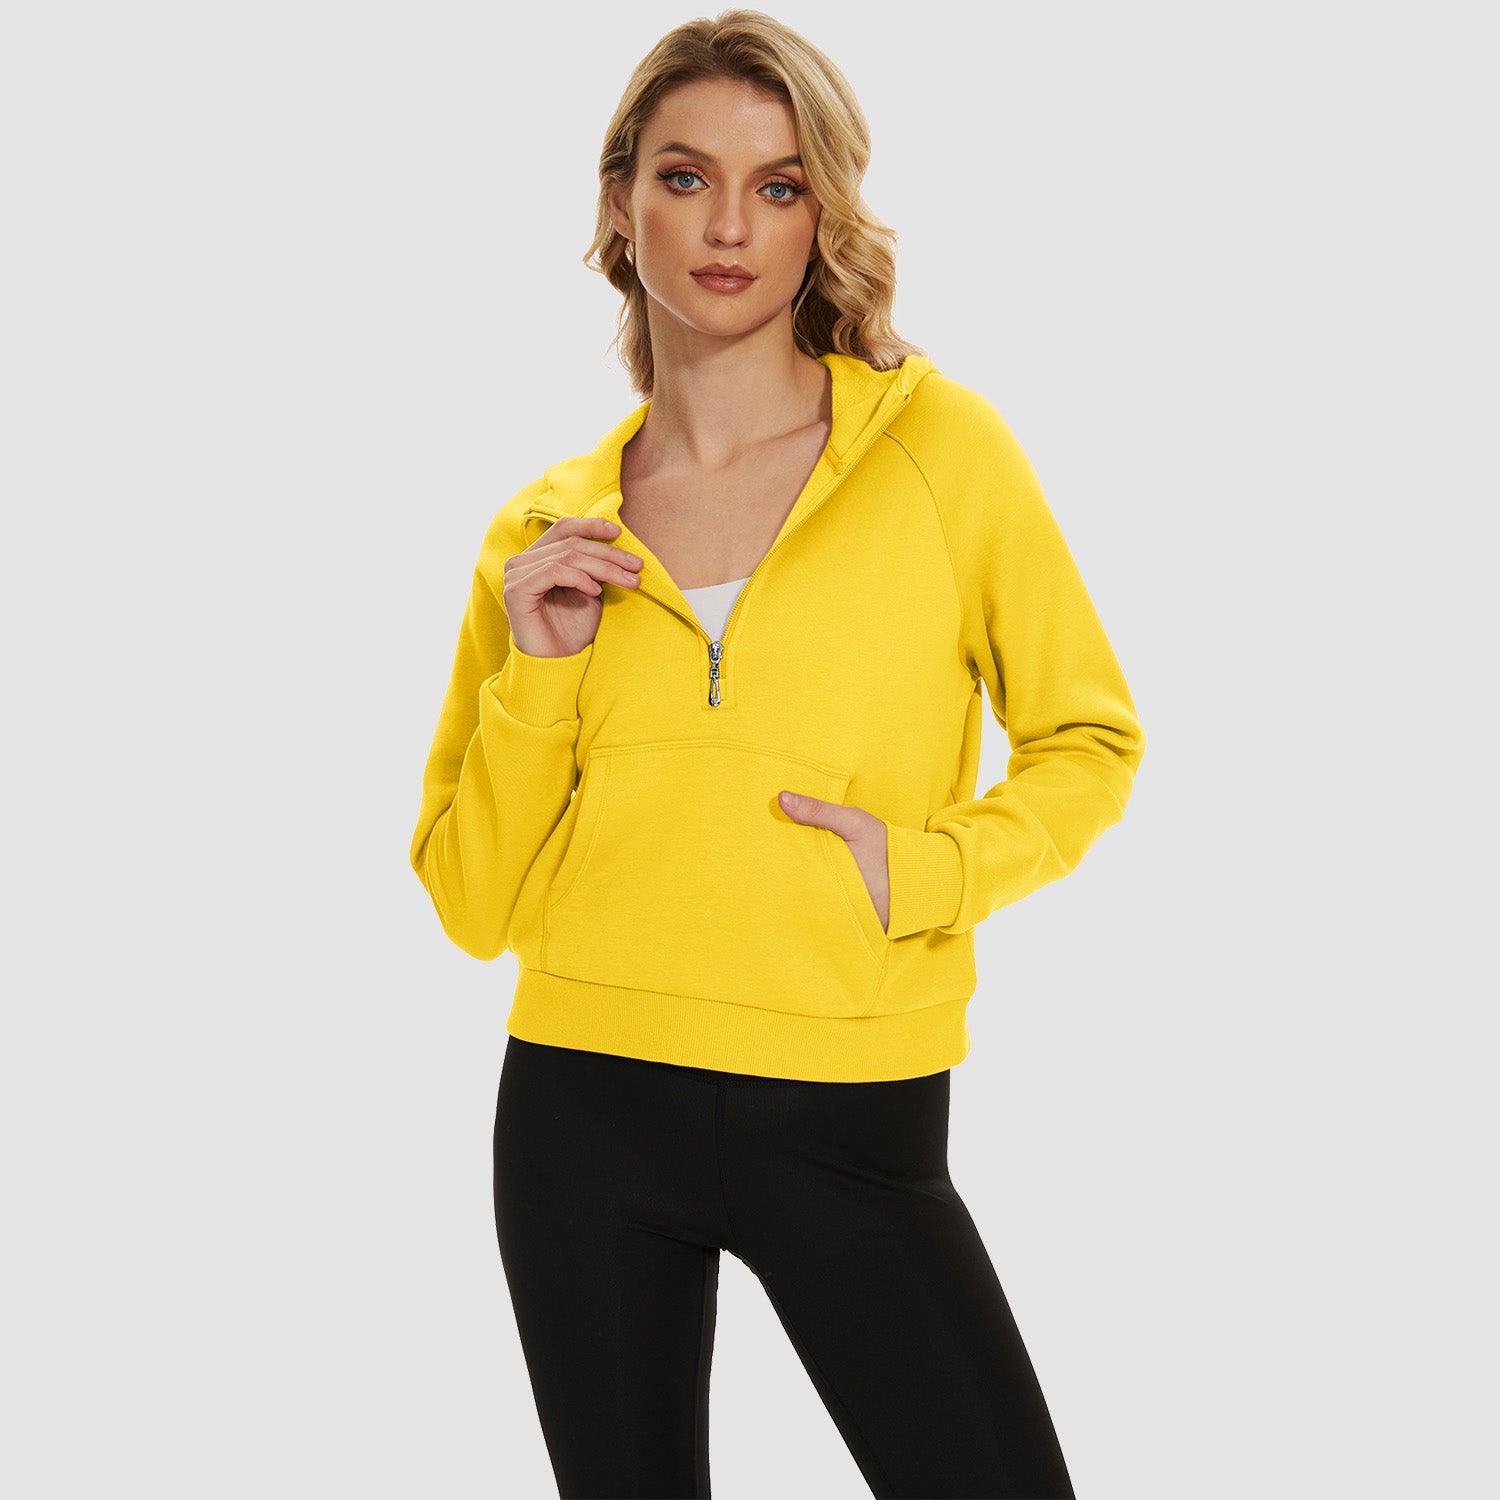 Womens Hoodie Fleece Lined 1/2 Zipper Sweatshirts Long Sleeve Crop Tops With Kangaroo Pocket